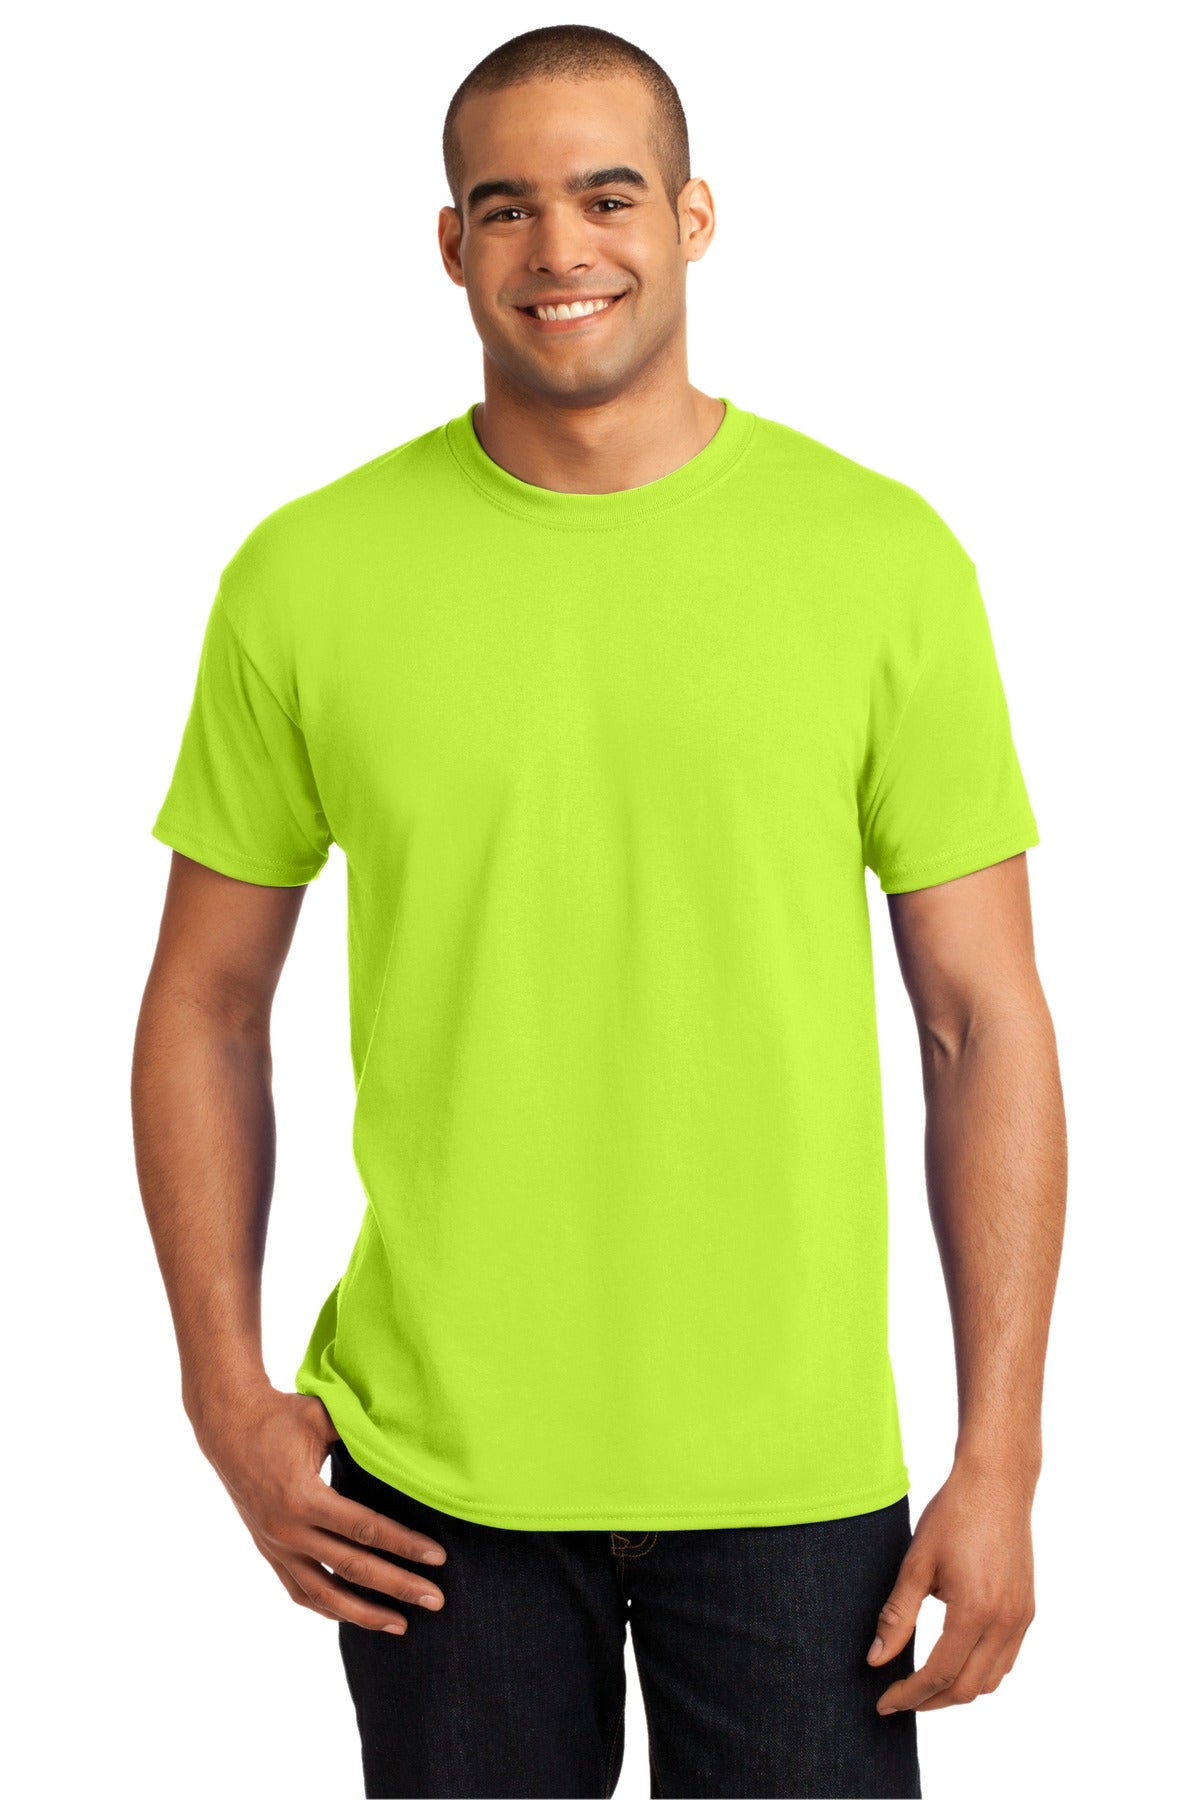 Hanes® - EcoSmart® 50/50 Cotton/Poly T-Shirt. 5170 [Safety Green] - DFW Impression